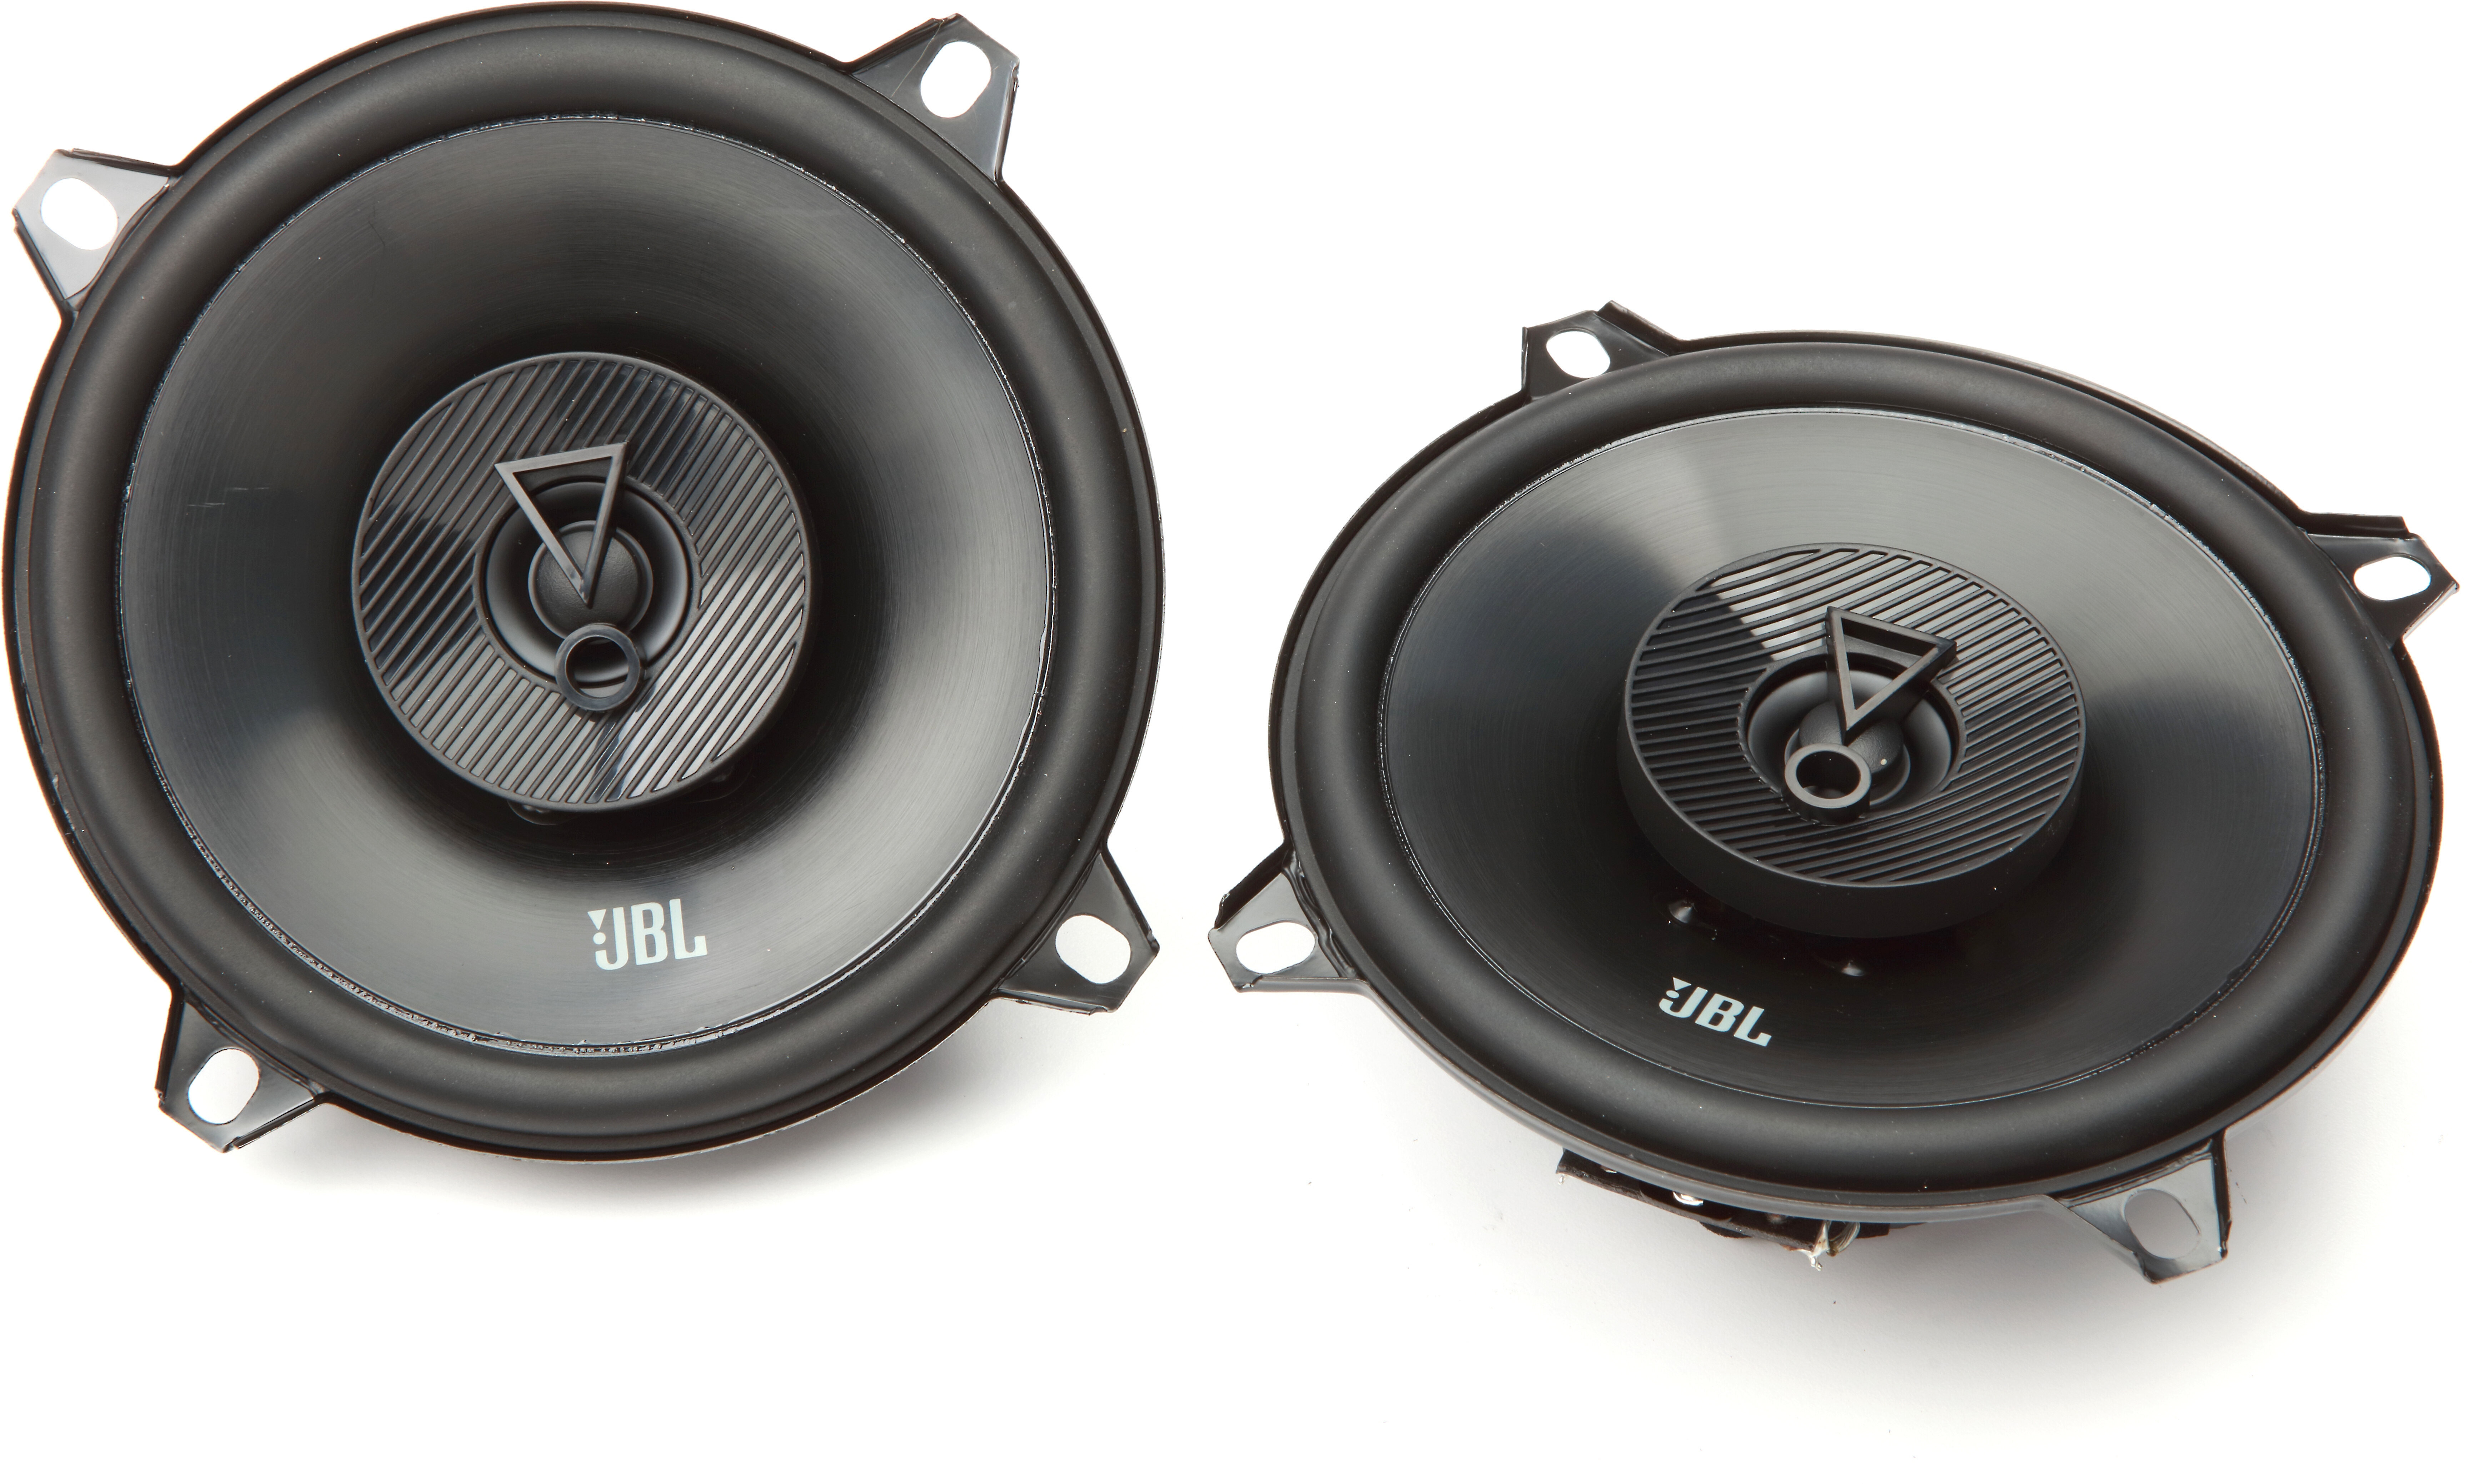 Customer Reviews: JBL 521F 5-1/4" 2-way speakers at